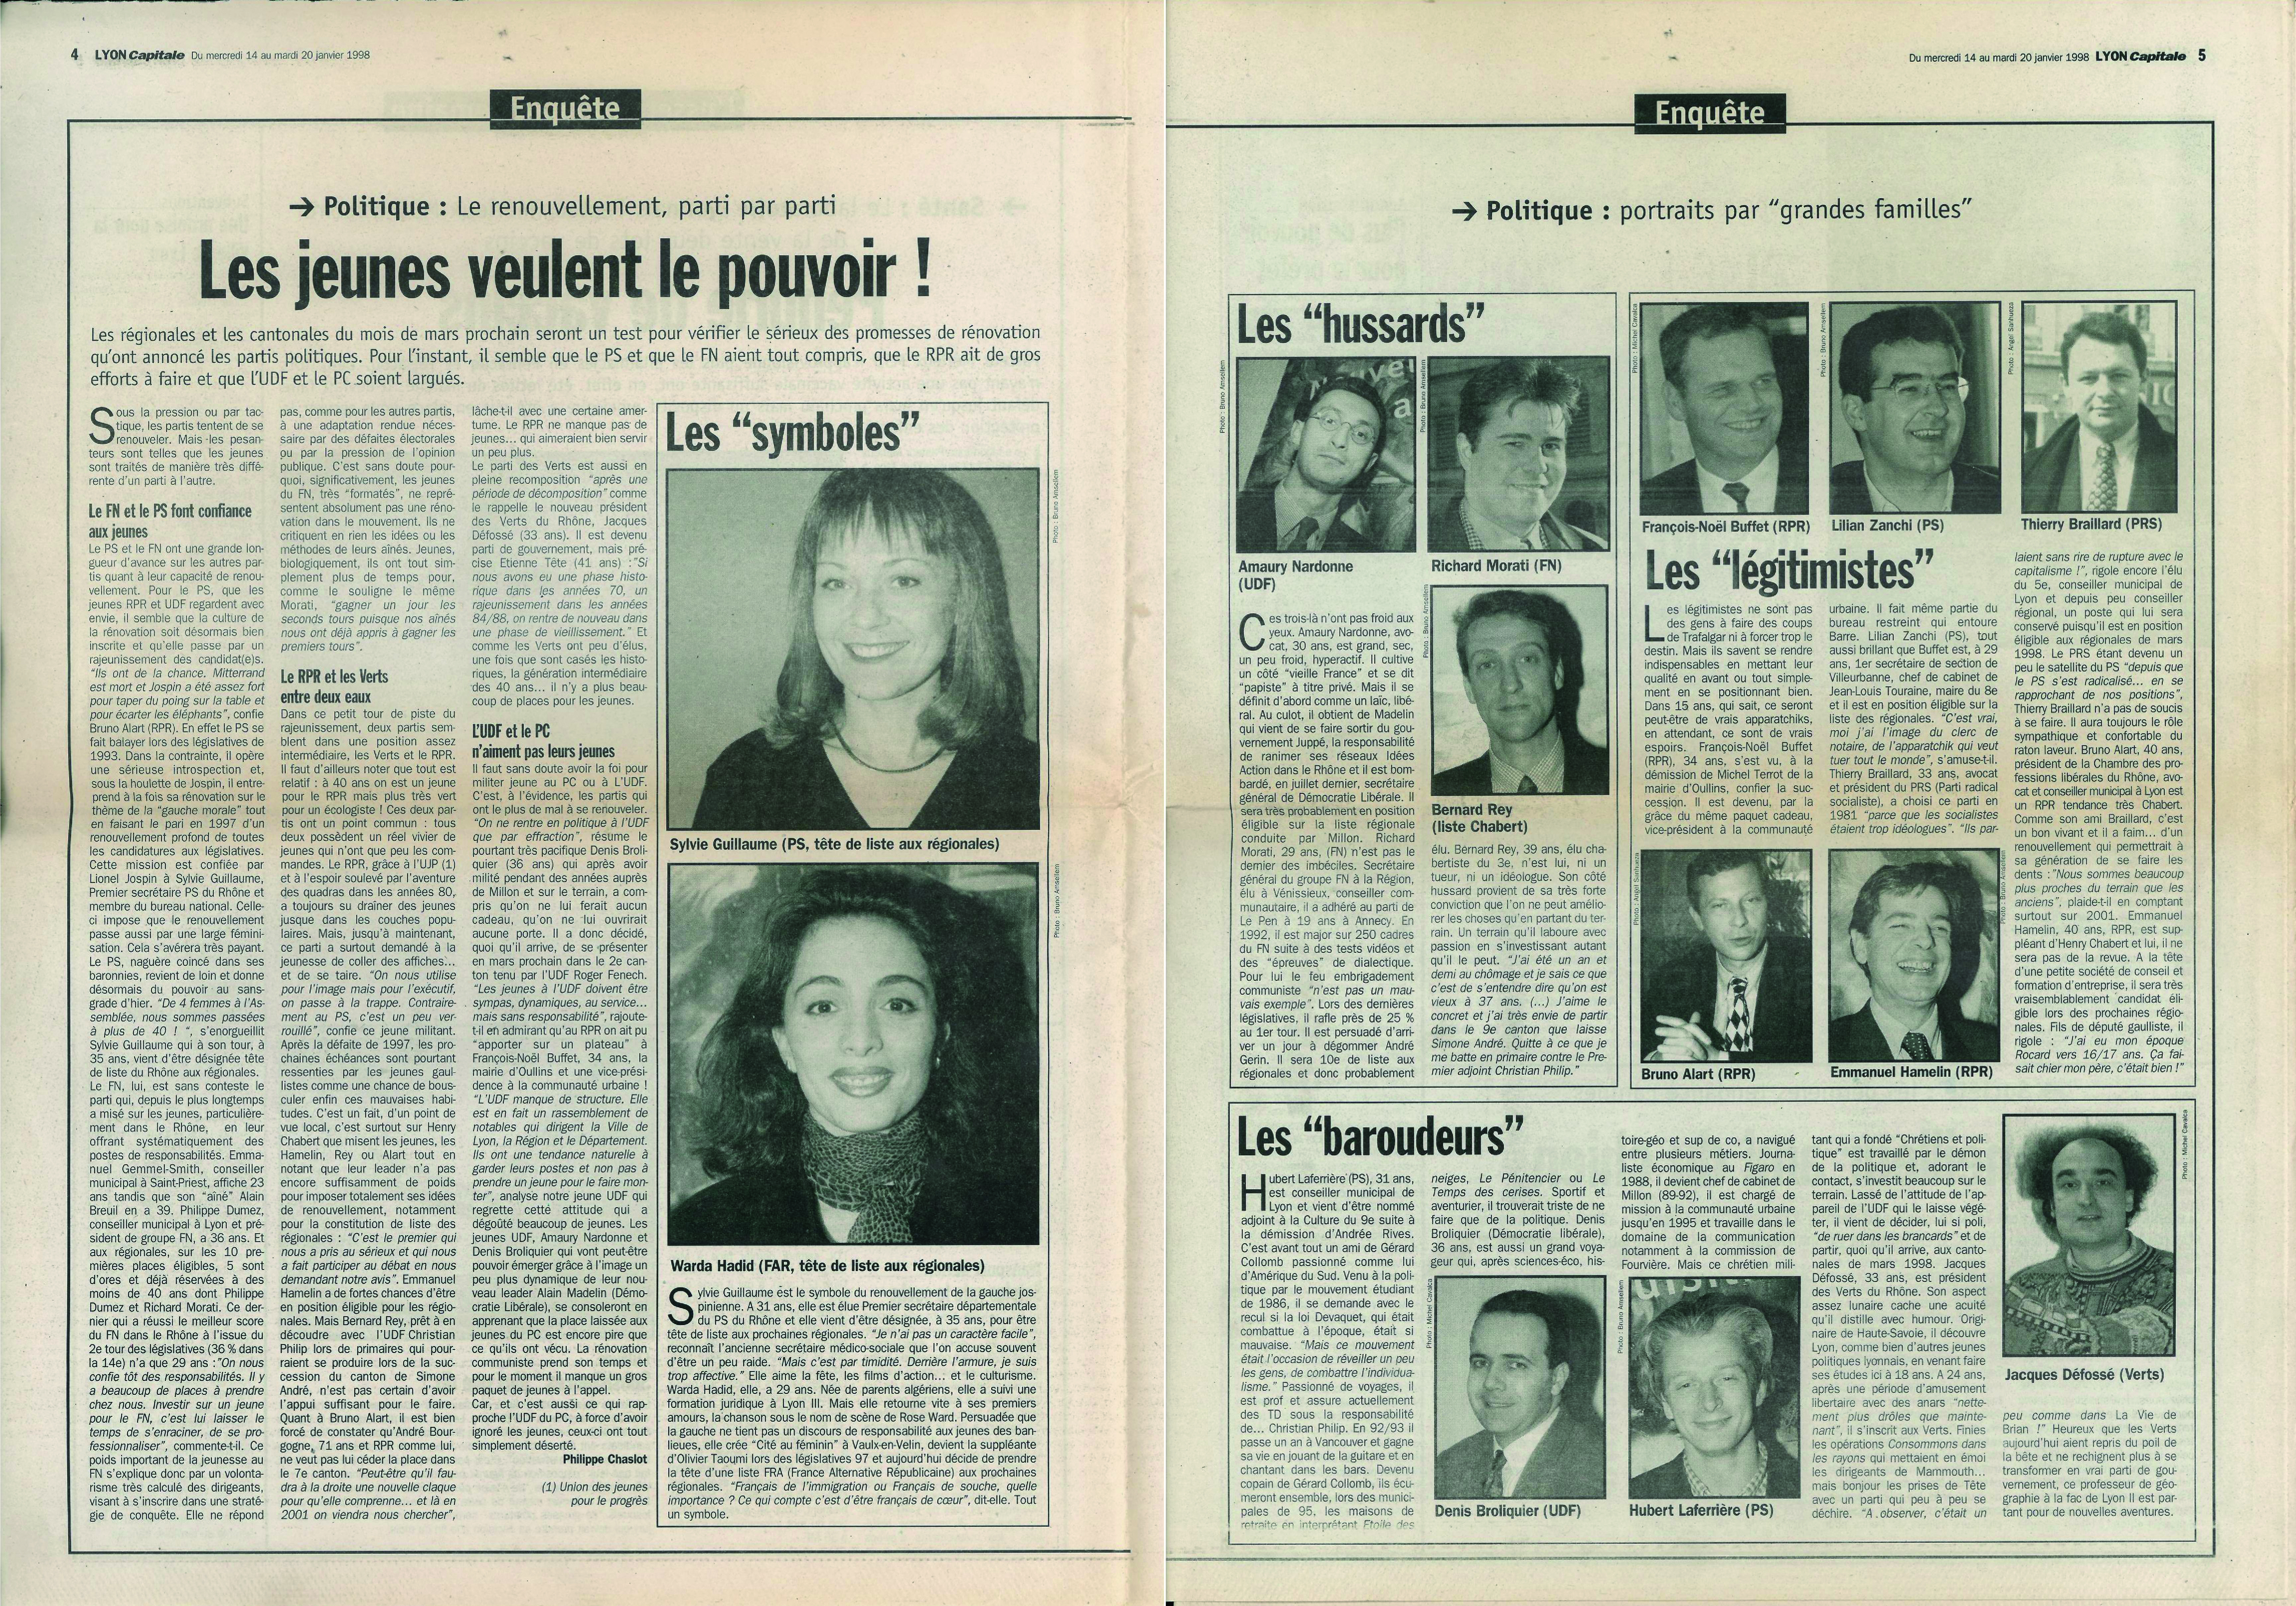 Lyon Capitale n°154, 14 janvier 1998, p. 4 © Lyon Capitale